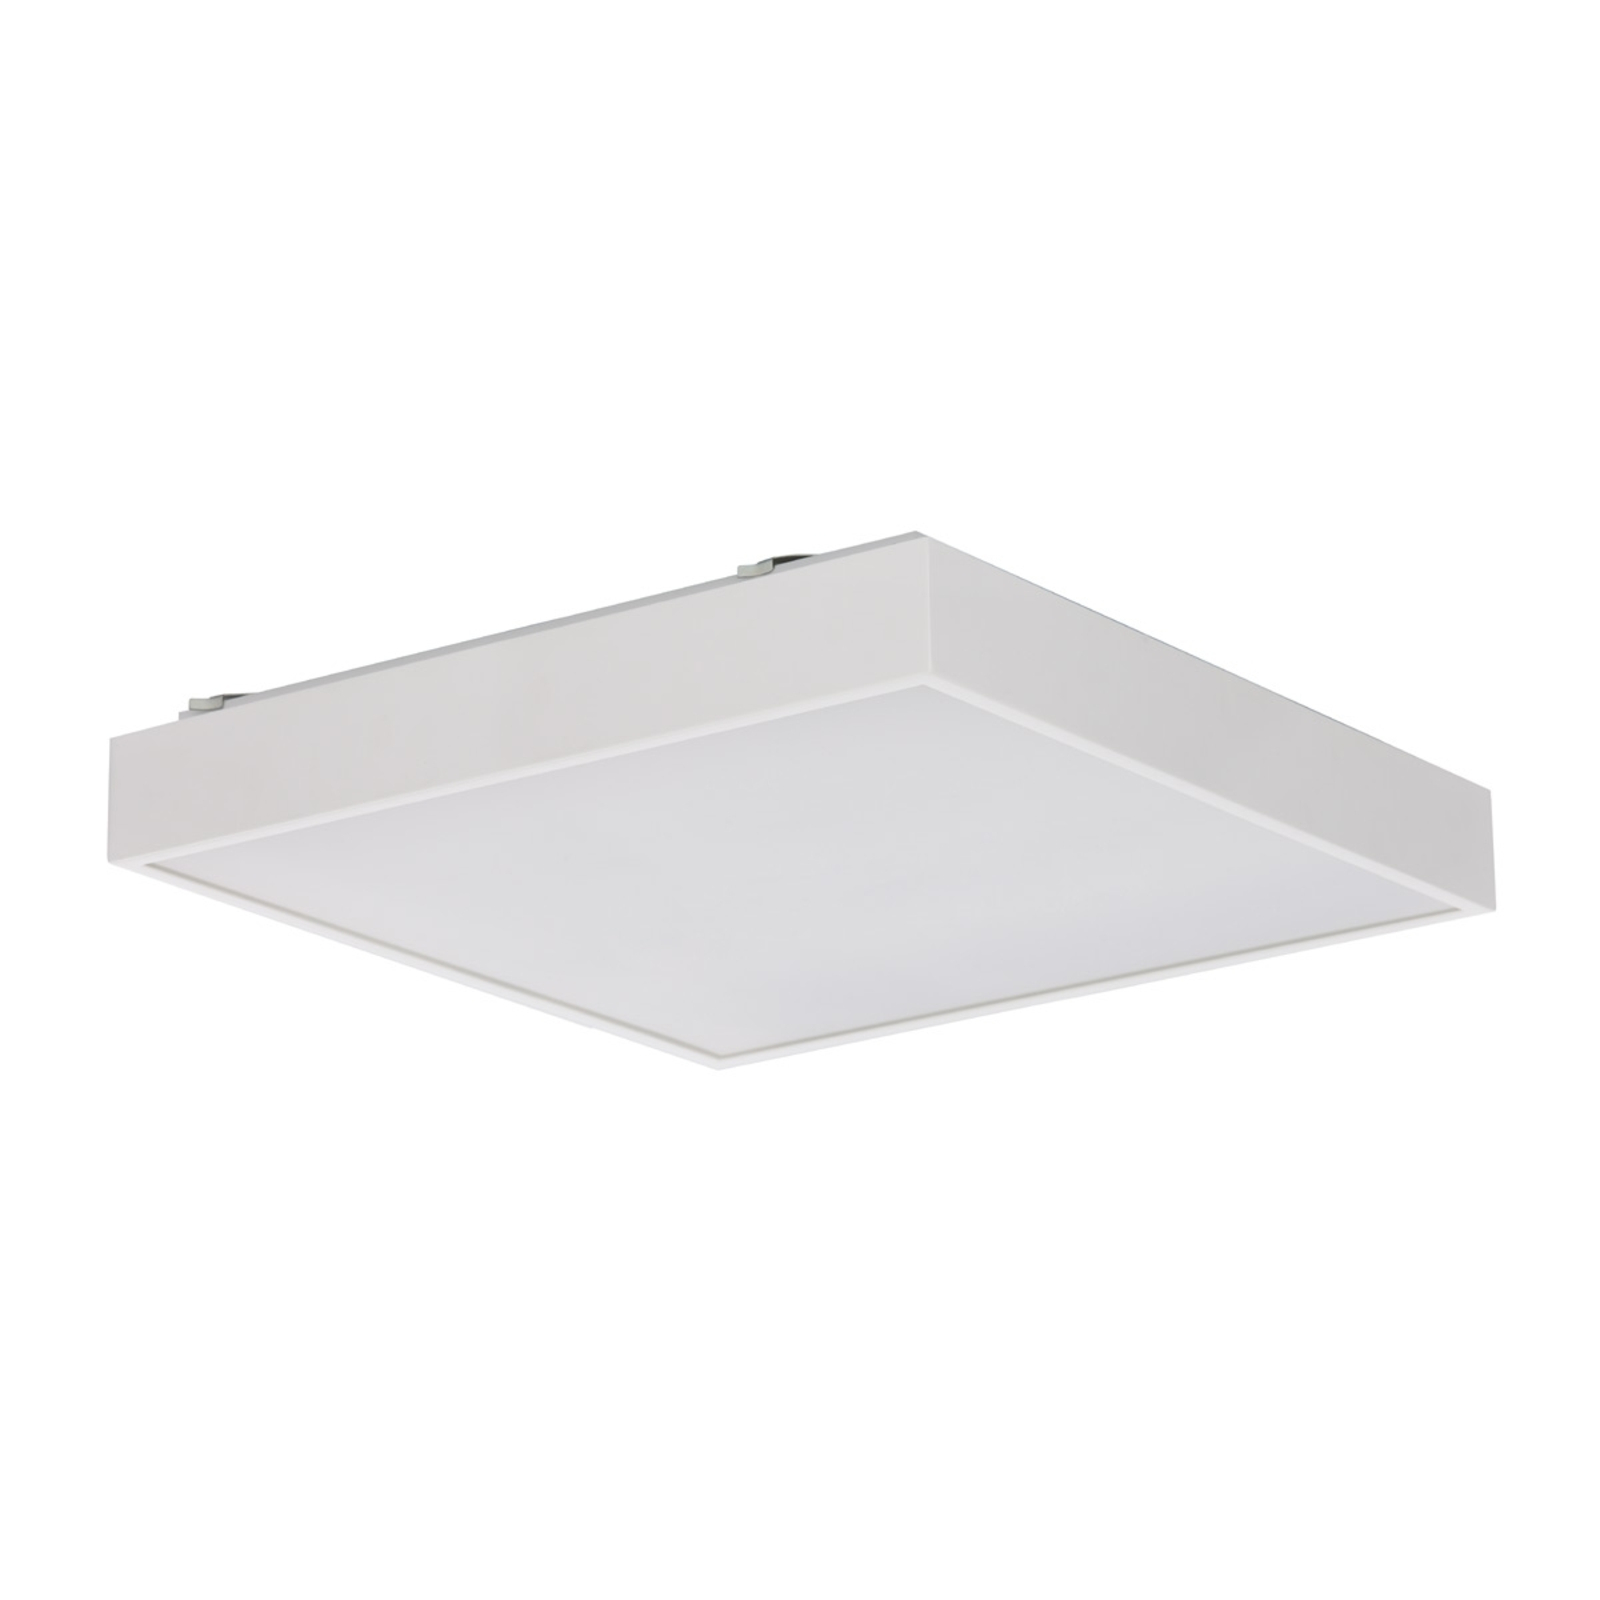 Vierkante led-plafondlamp Q5, wit, EVA